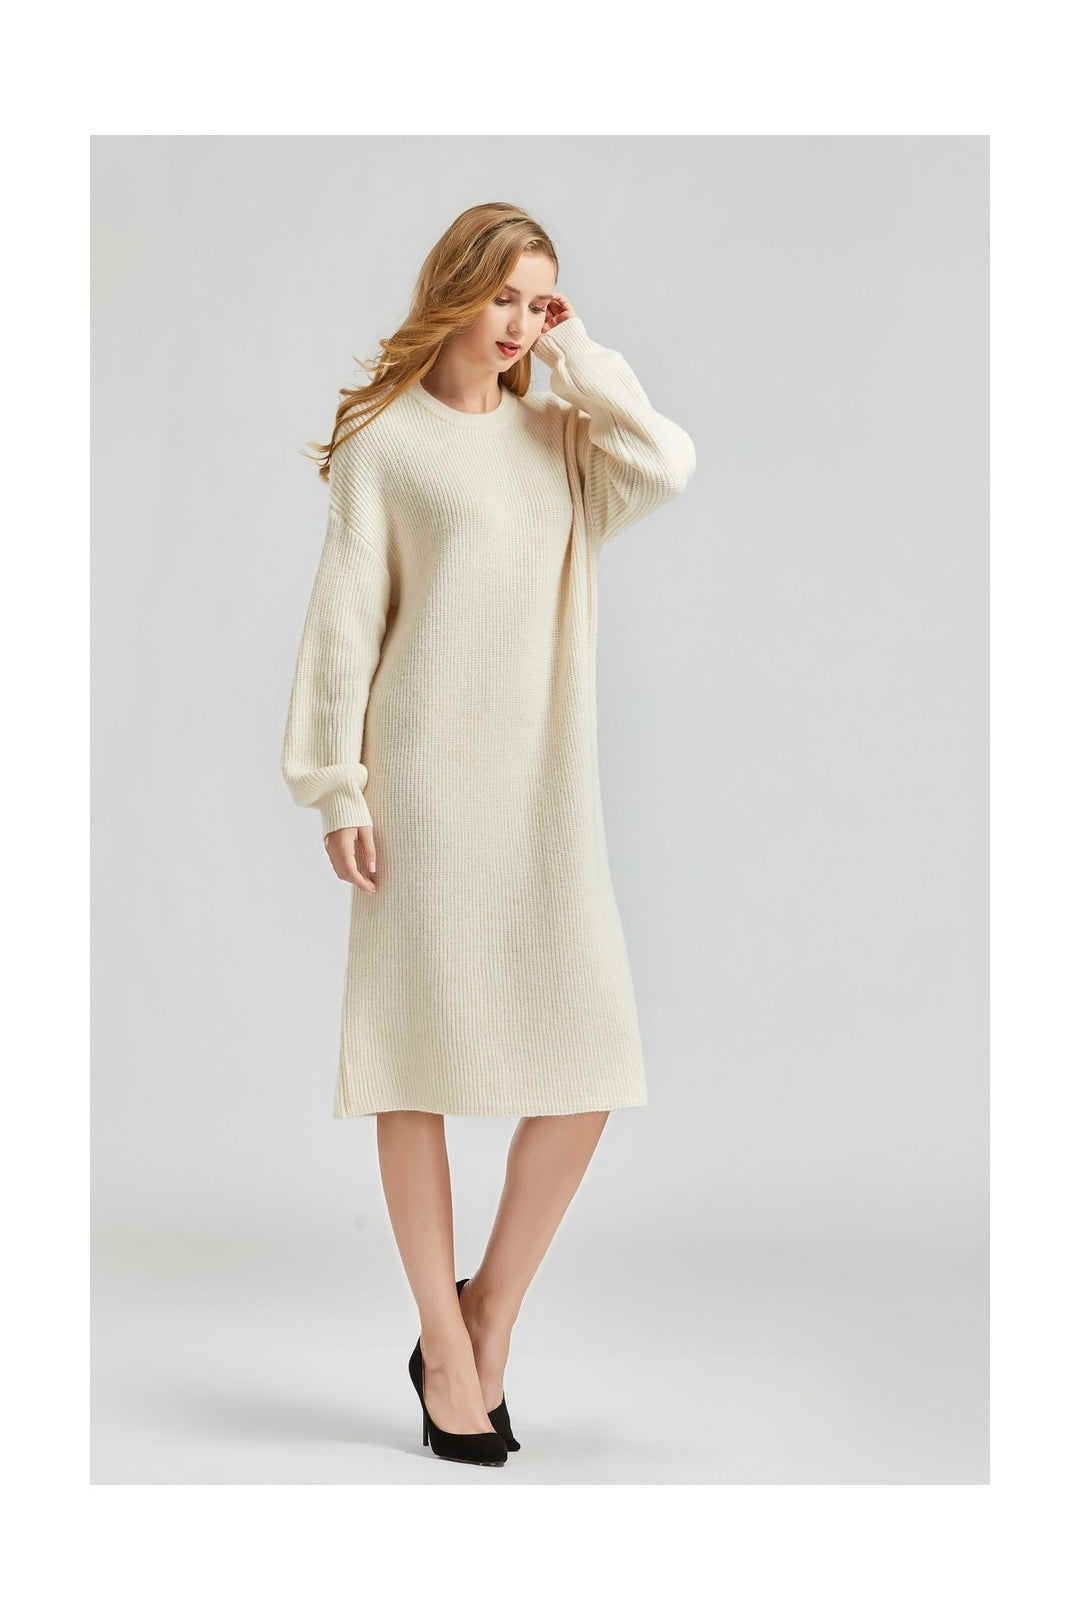 Beige Long Sleeve Sweater Midi Dress - Front View